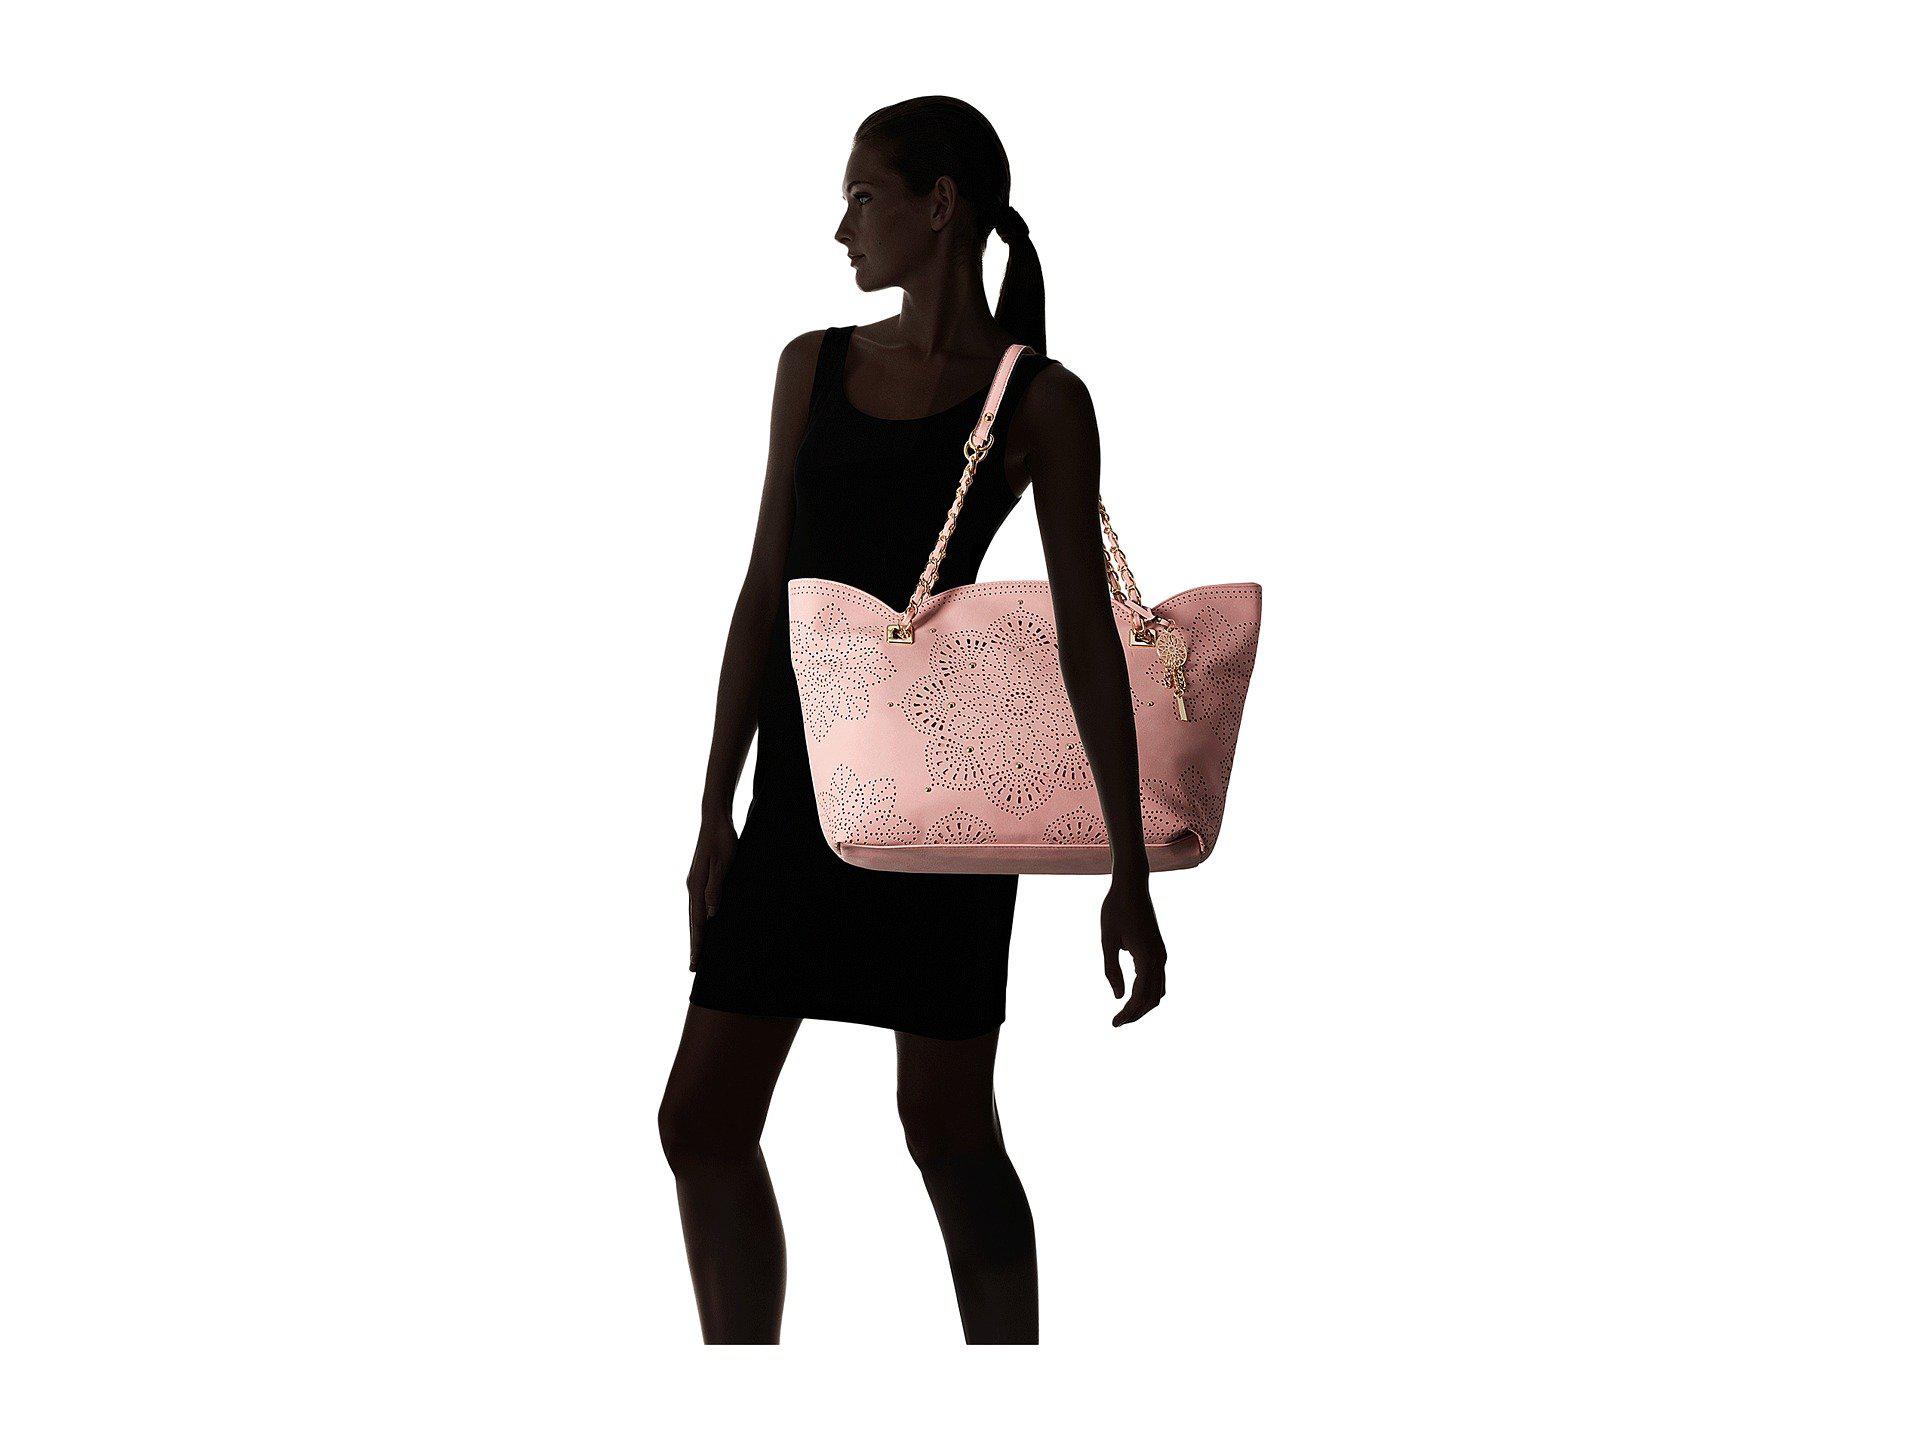 Jessica Simpson Doris Tote Bag in Pink